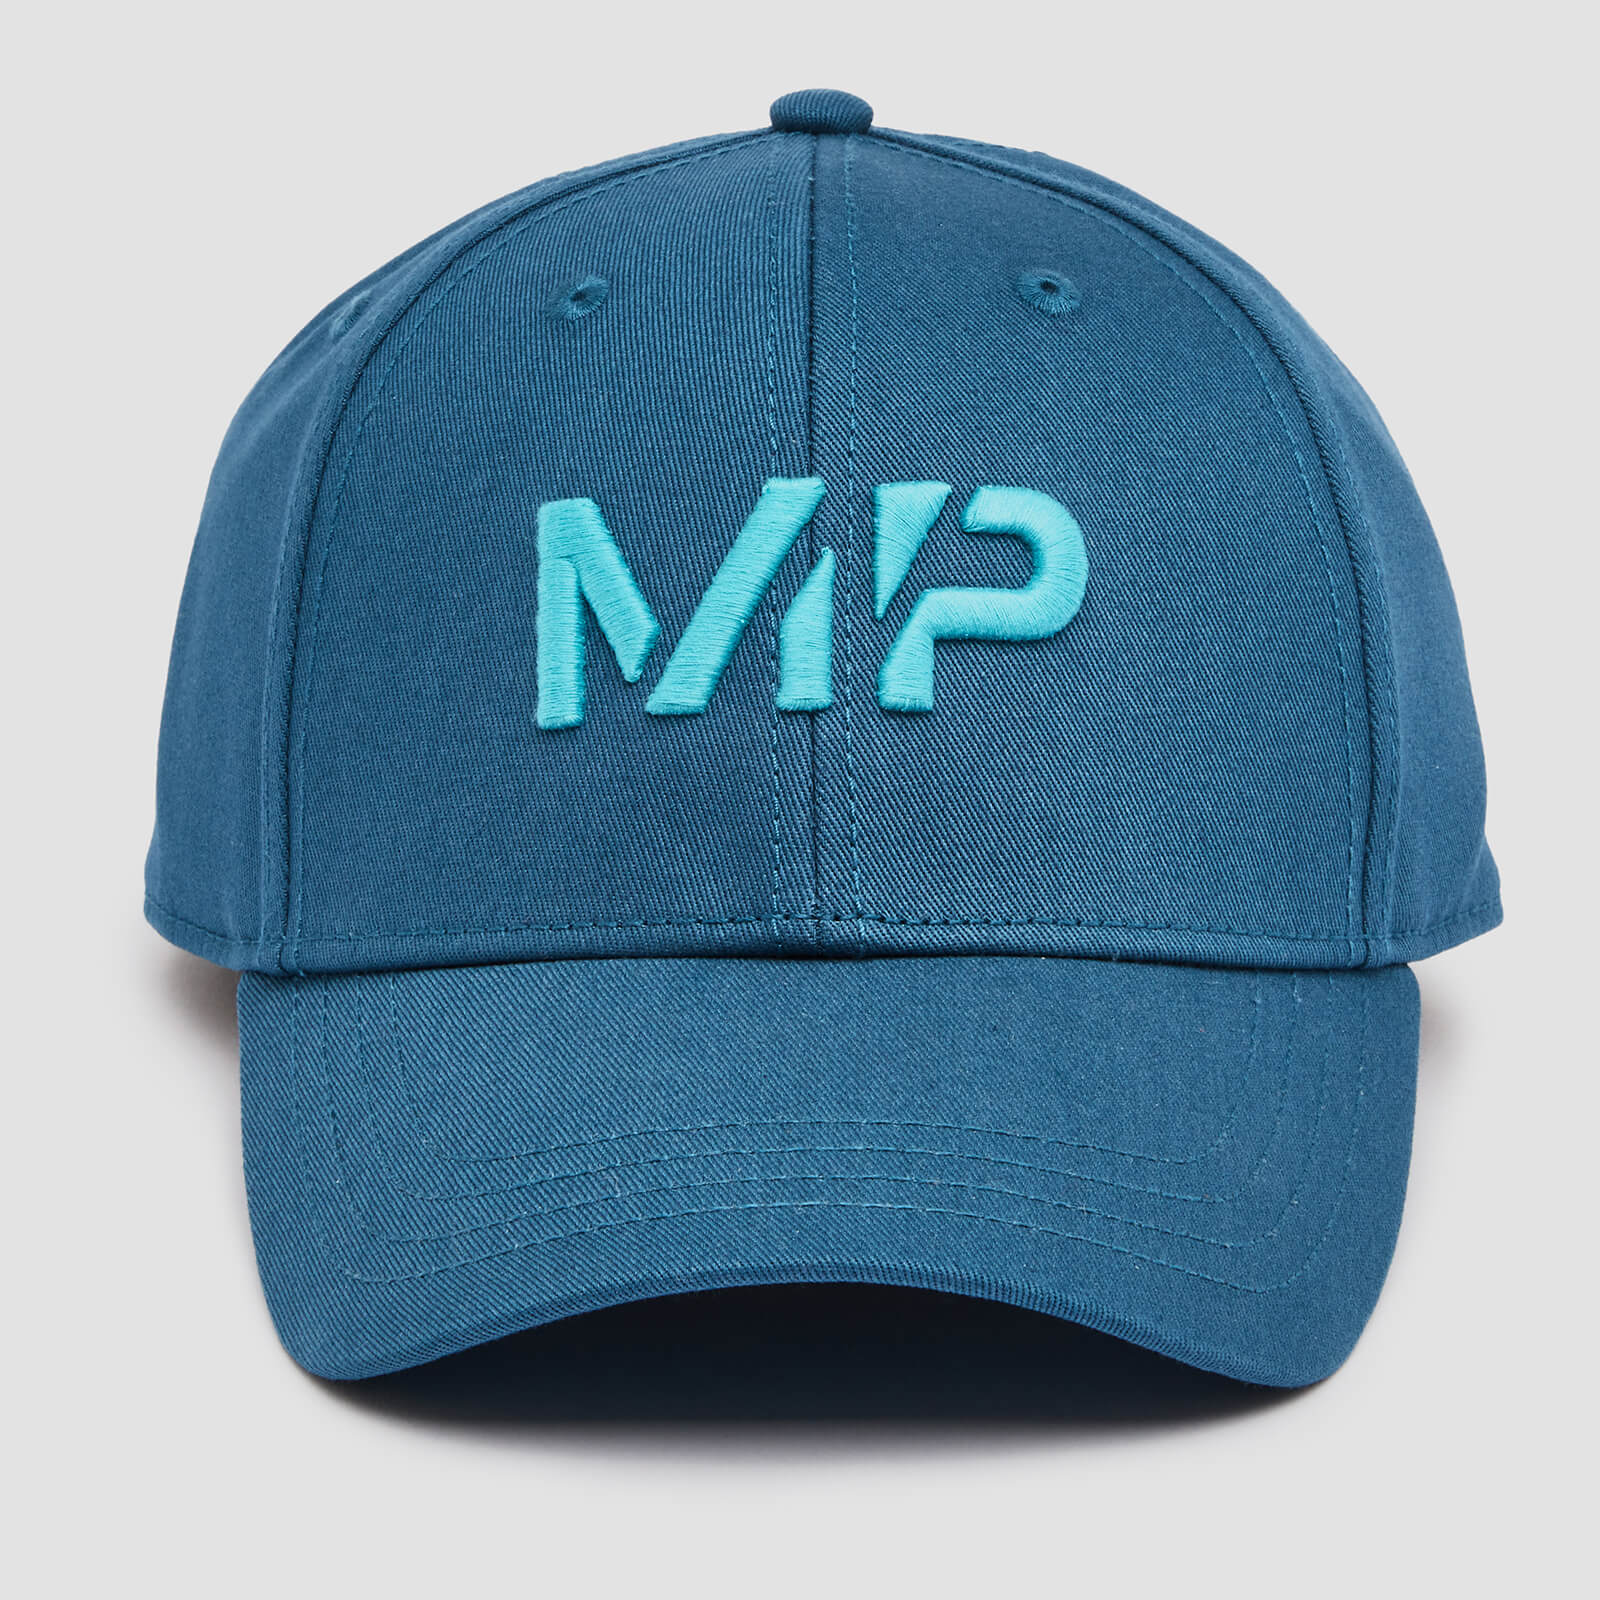 MP Шапка за бейзбол Impact, лимитирана серия - синьо-зелена